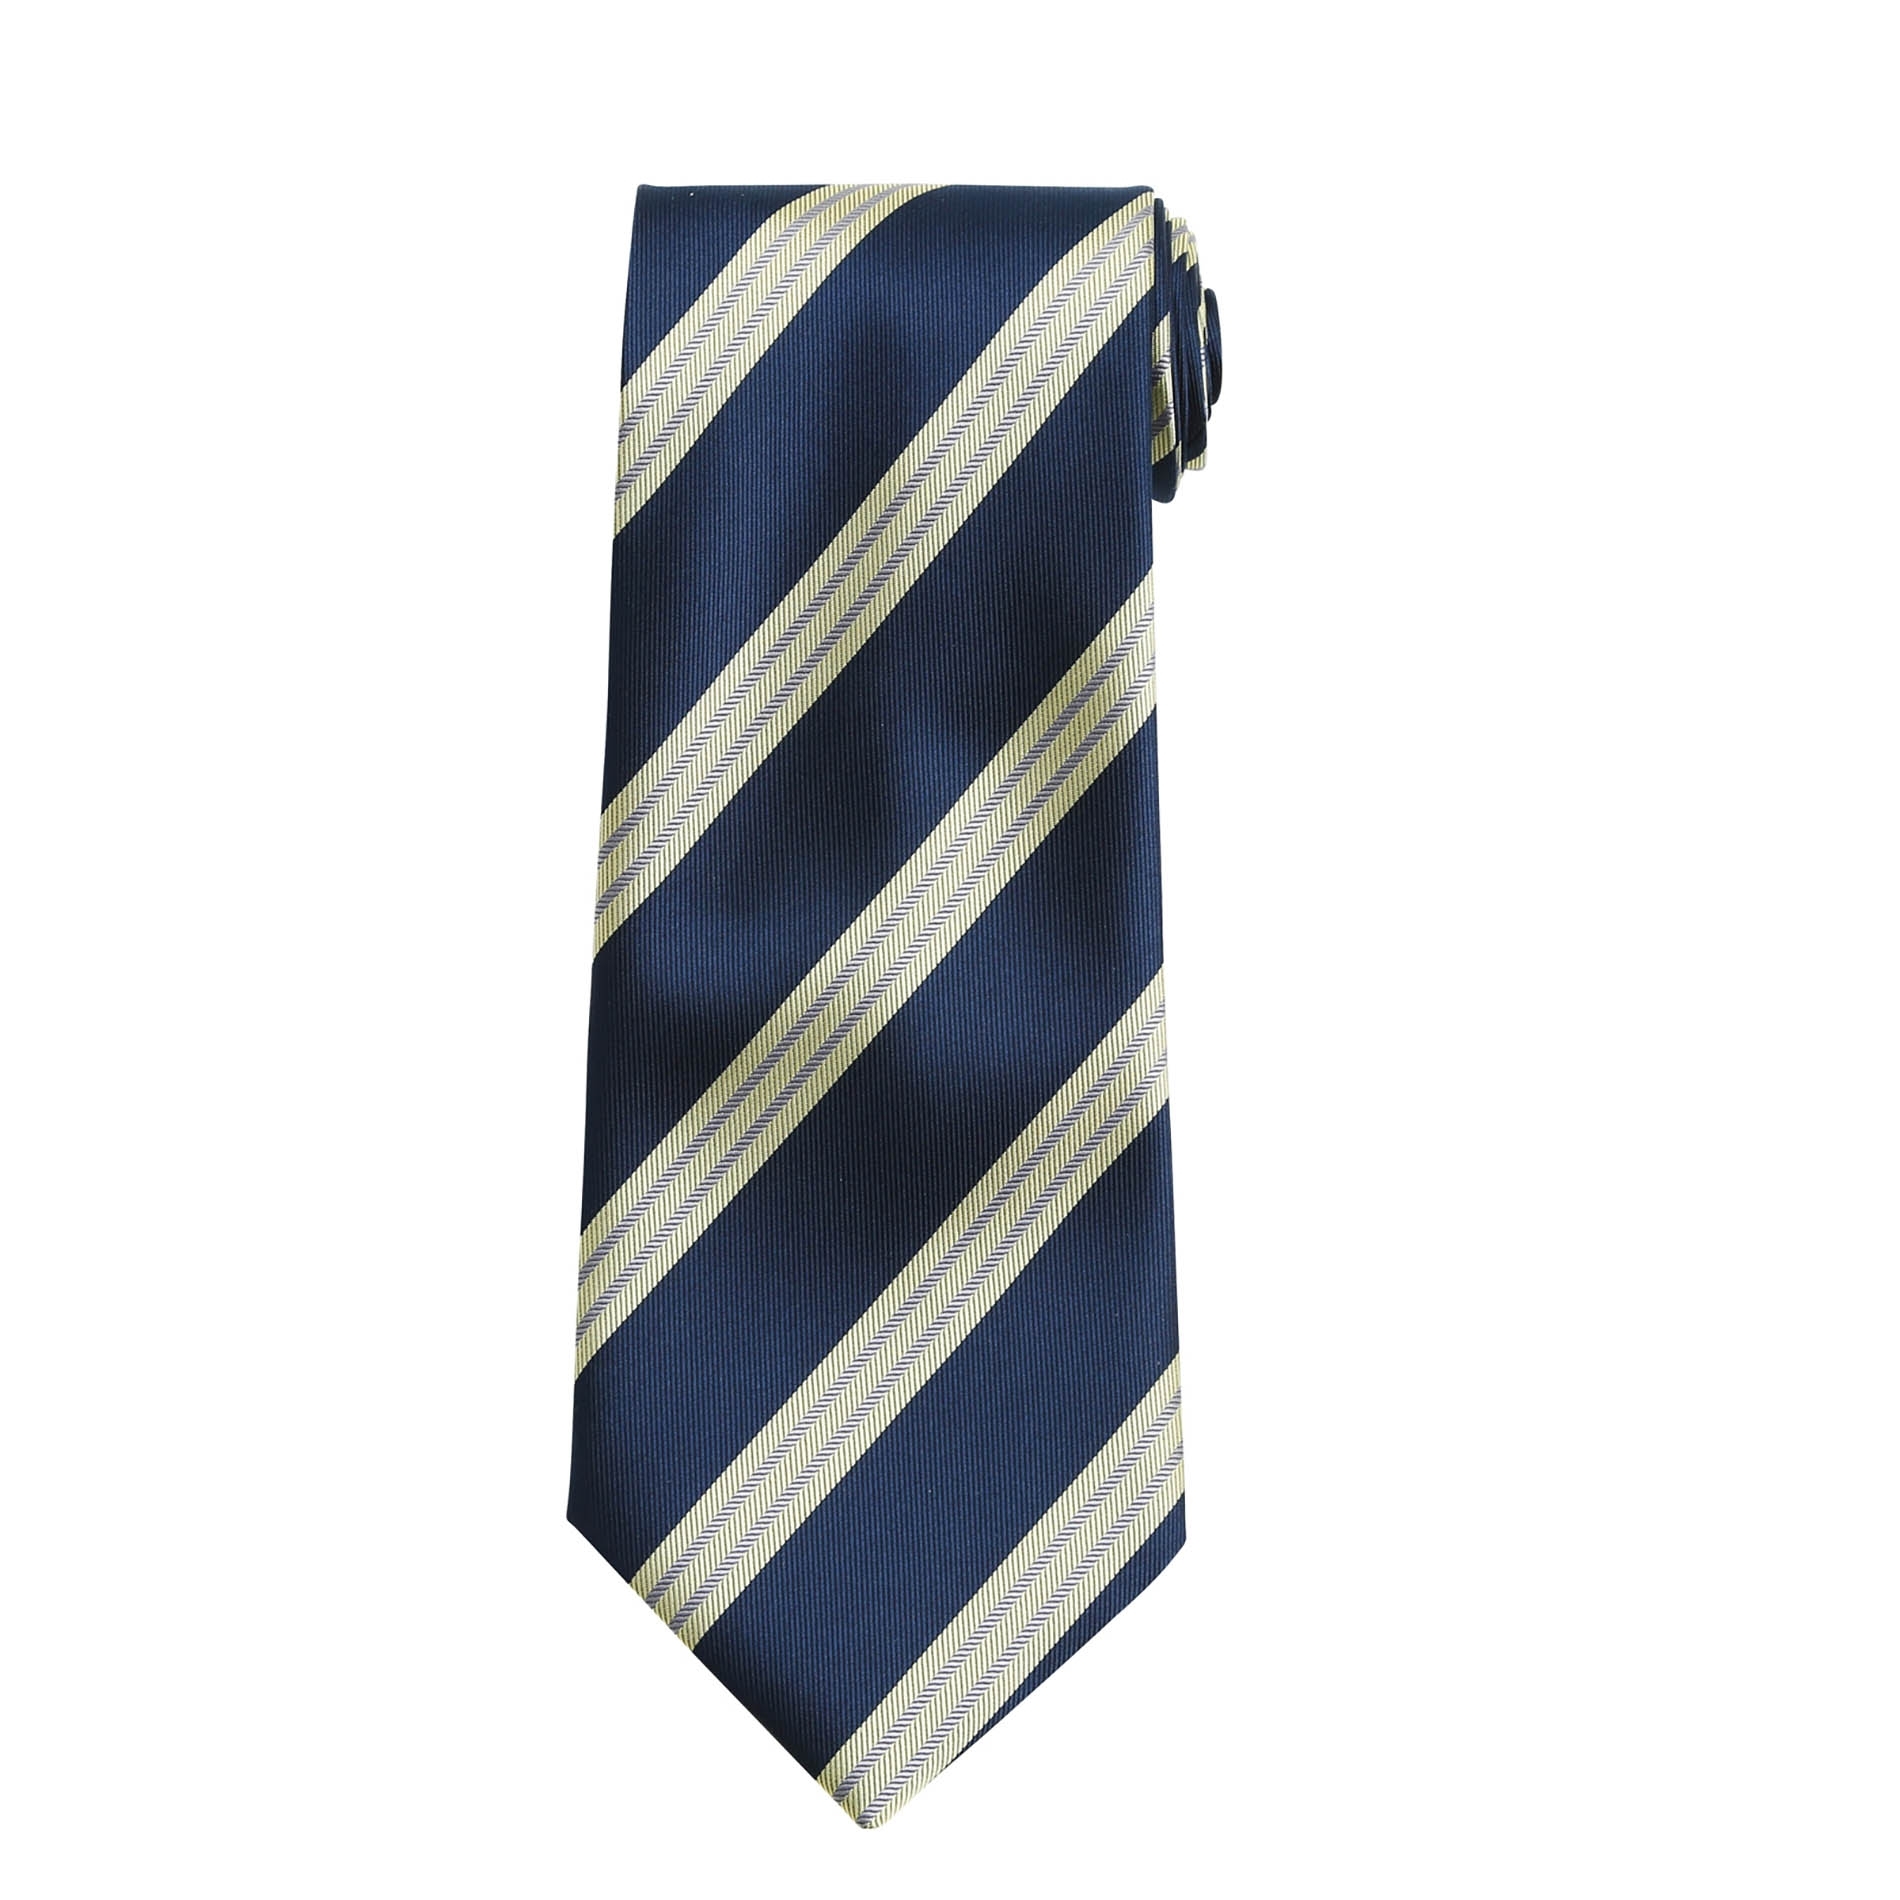 Cravate STRIPES Navy / Cream Bleu